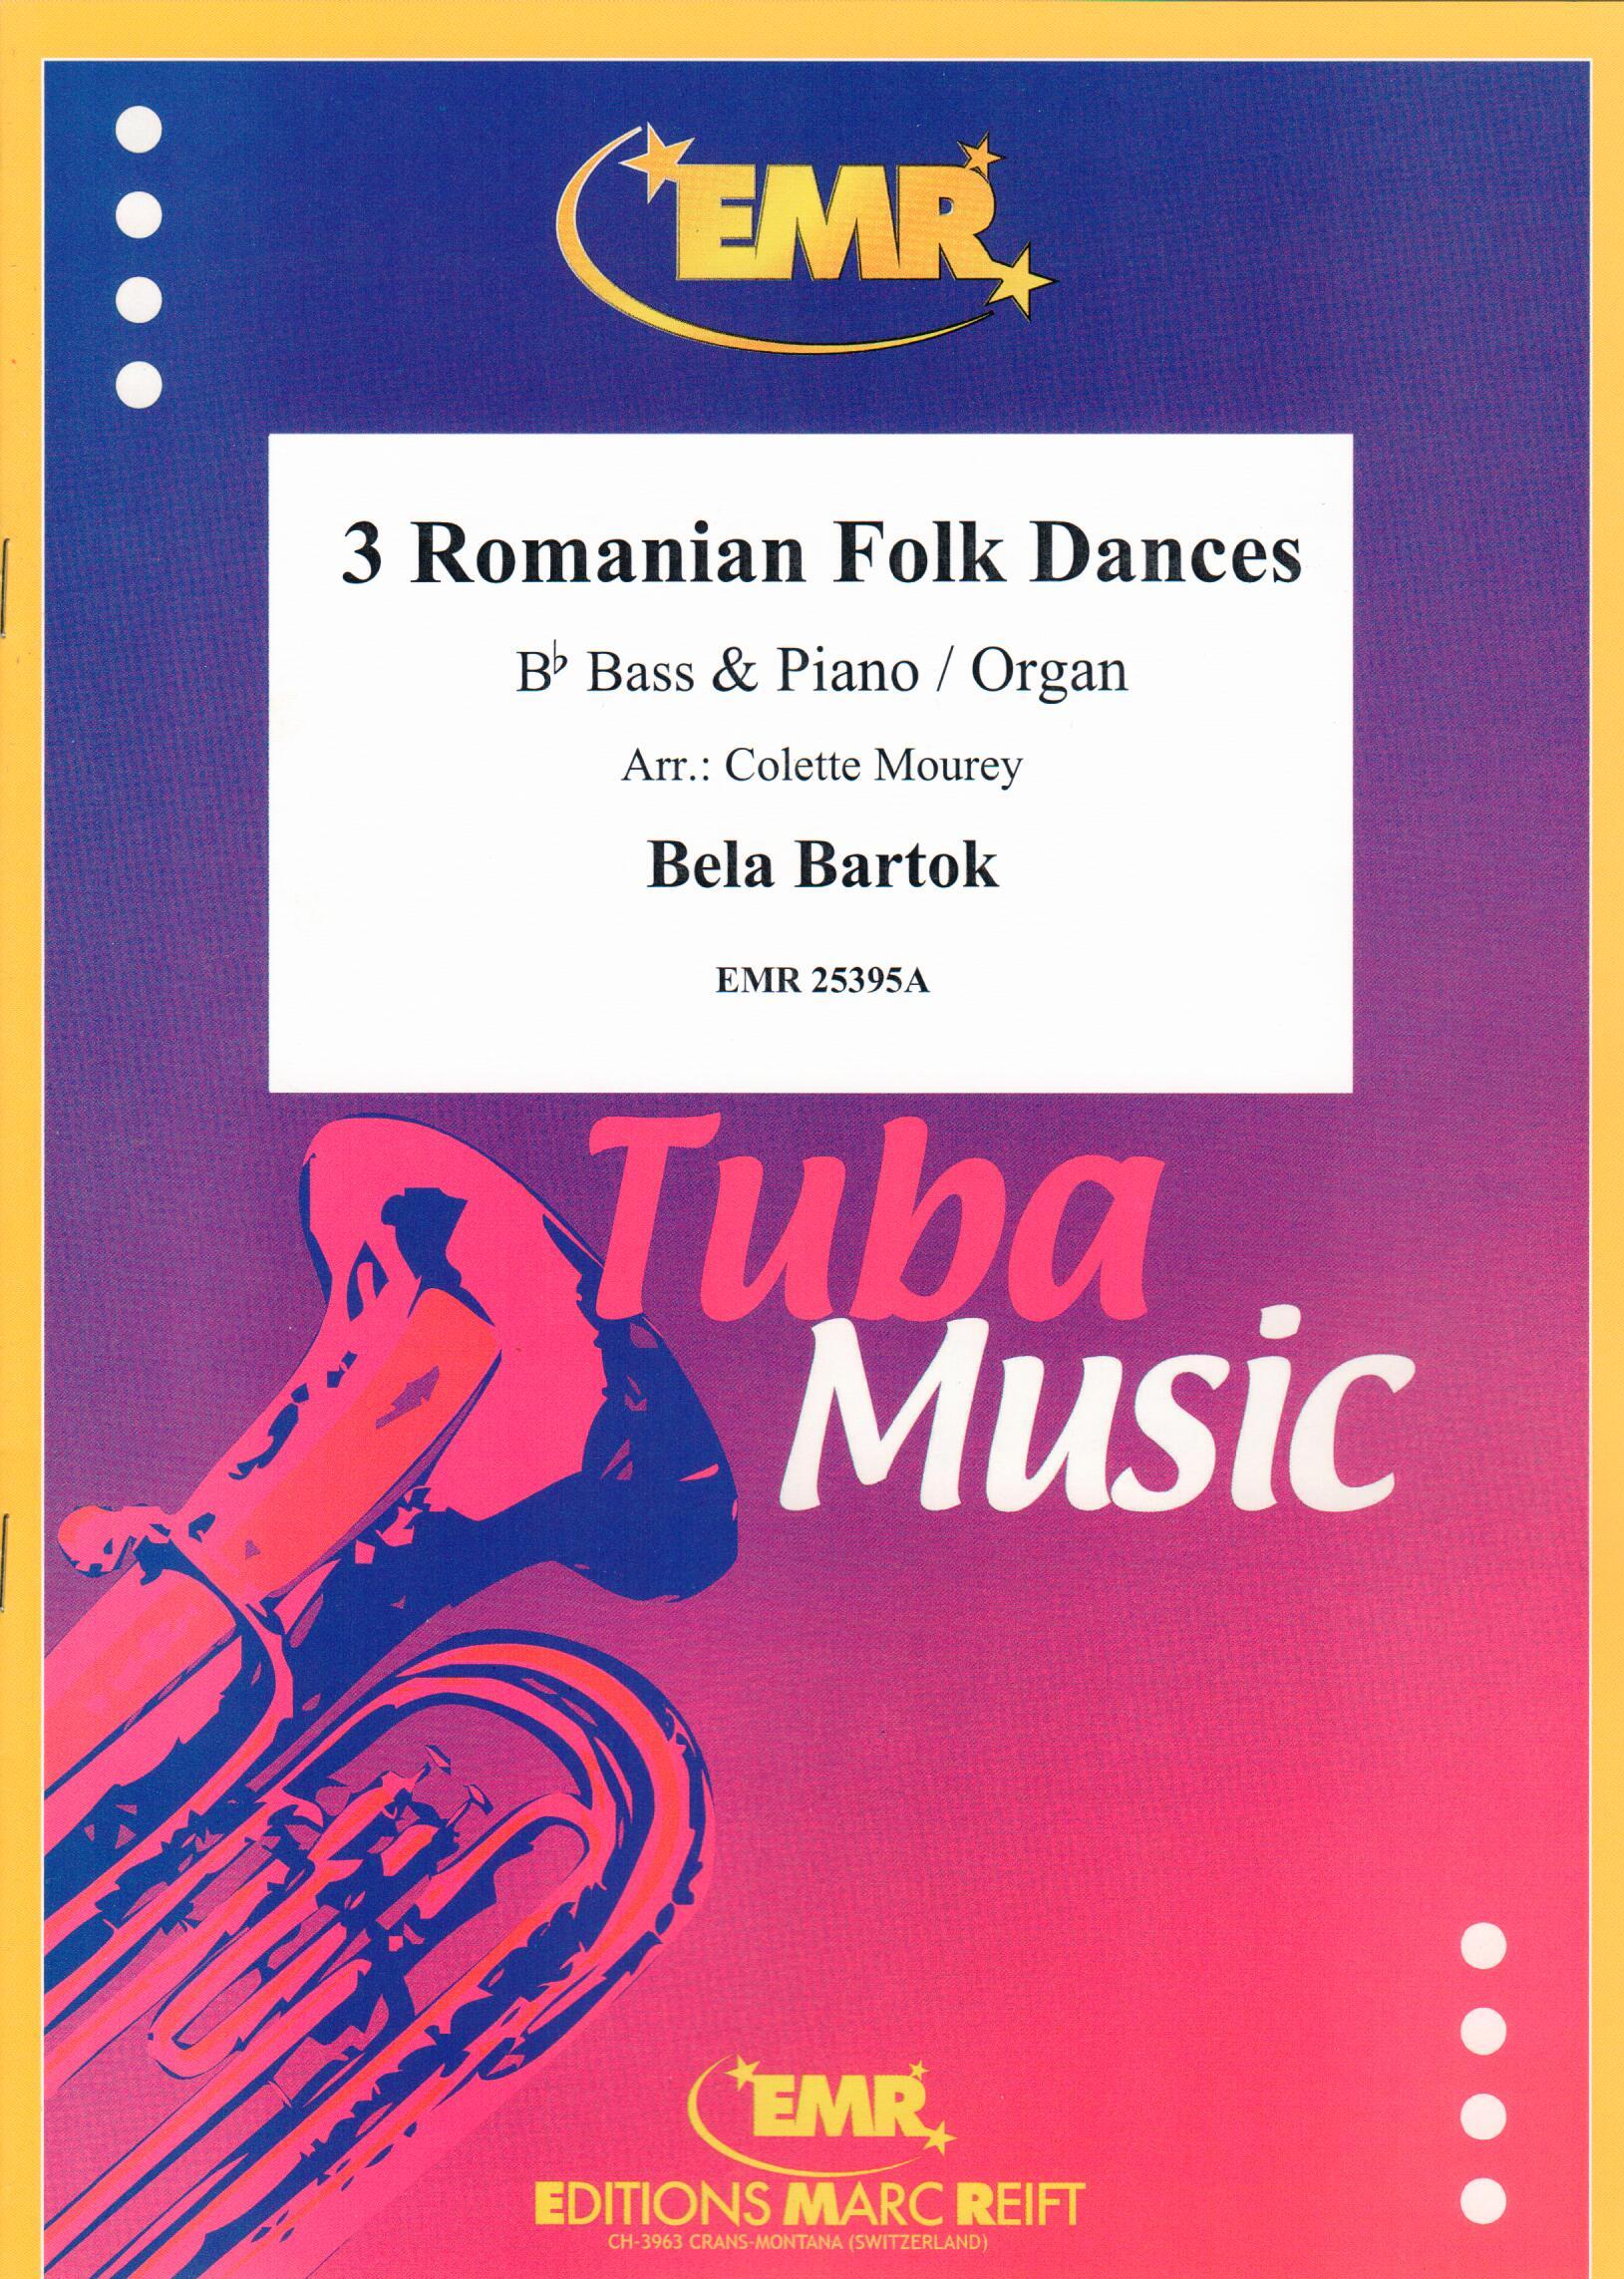 3 ROMANIAN FOLK DANCES